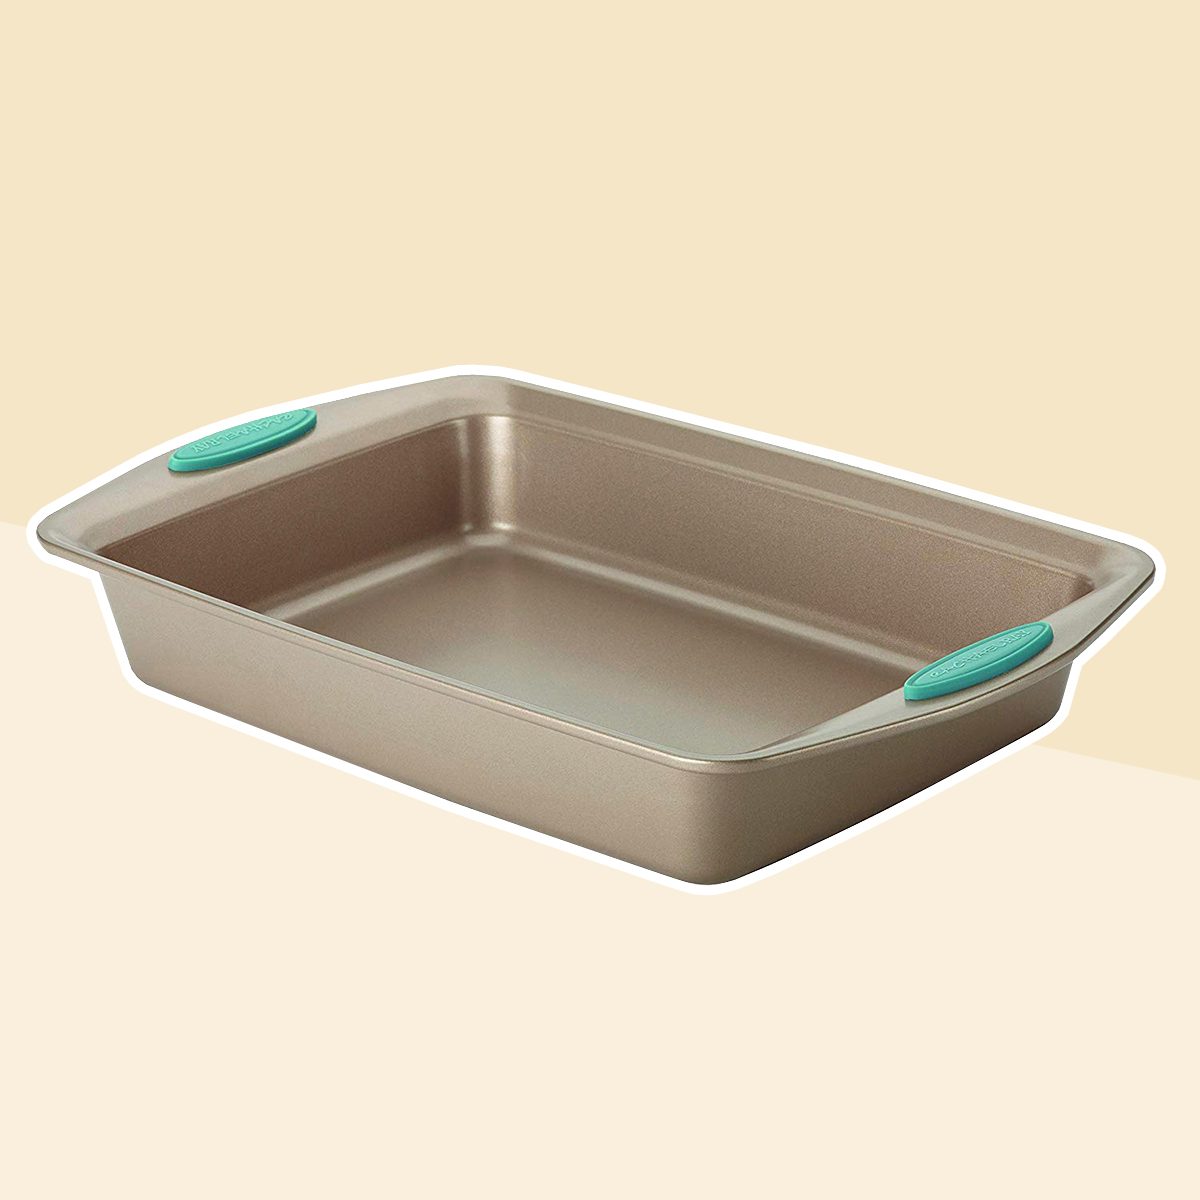 TN133G 13 x 9 Inch NonStick Metal Baking Pan by Taste of Home – RangeKleen